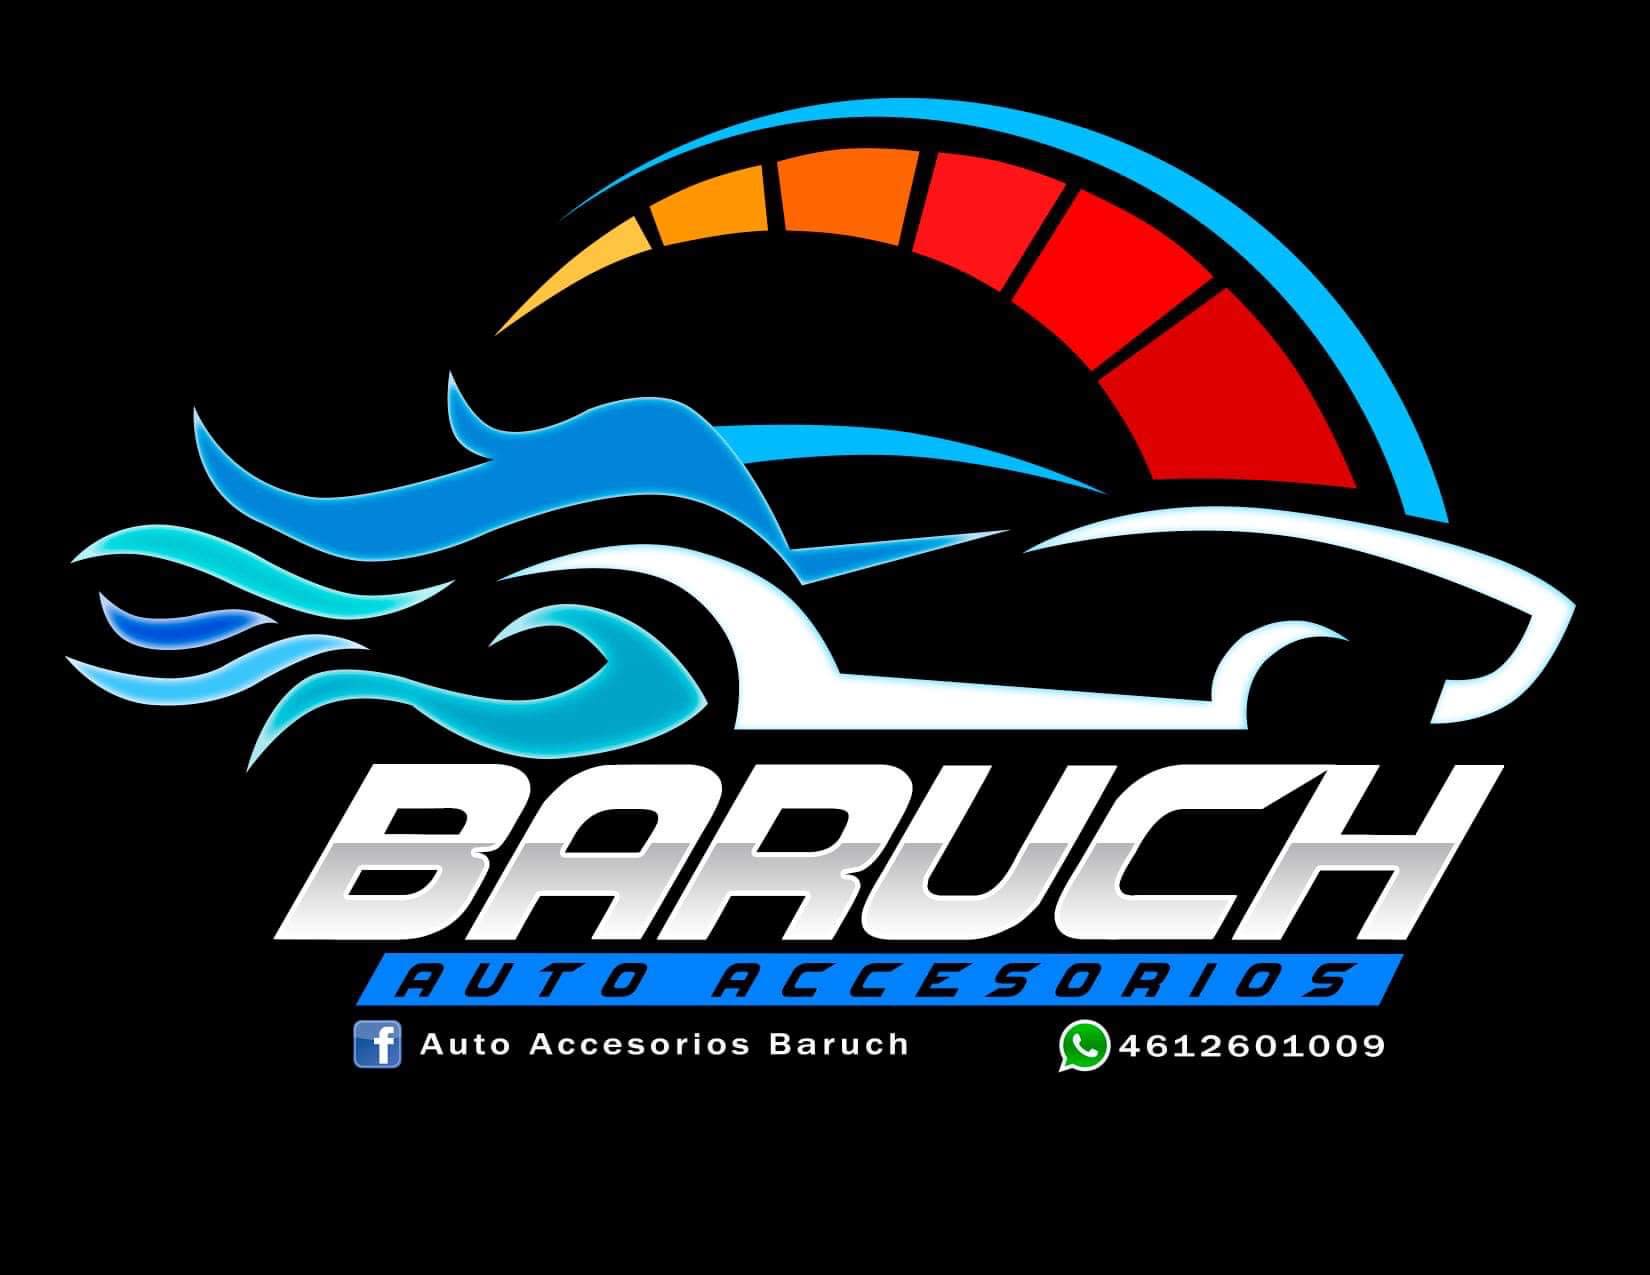 Led y Accesorios Baruch